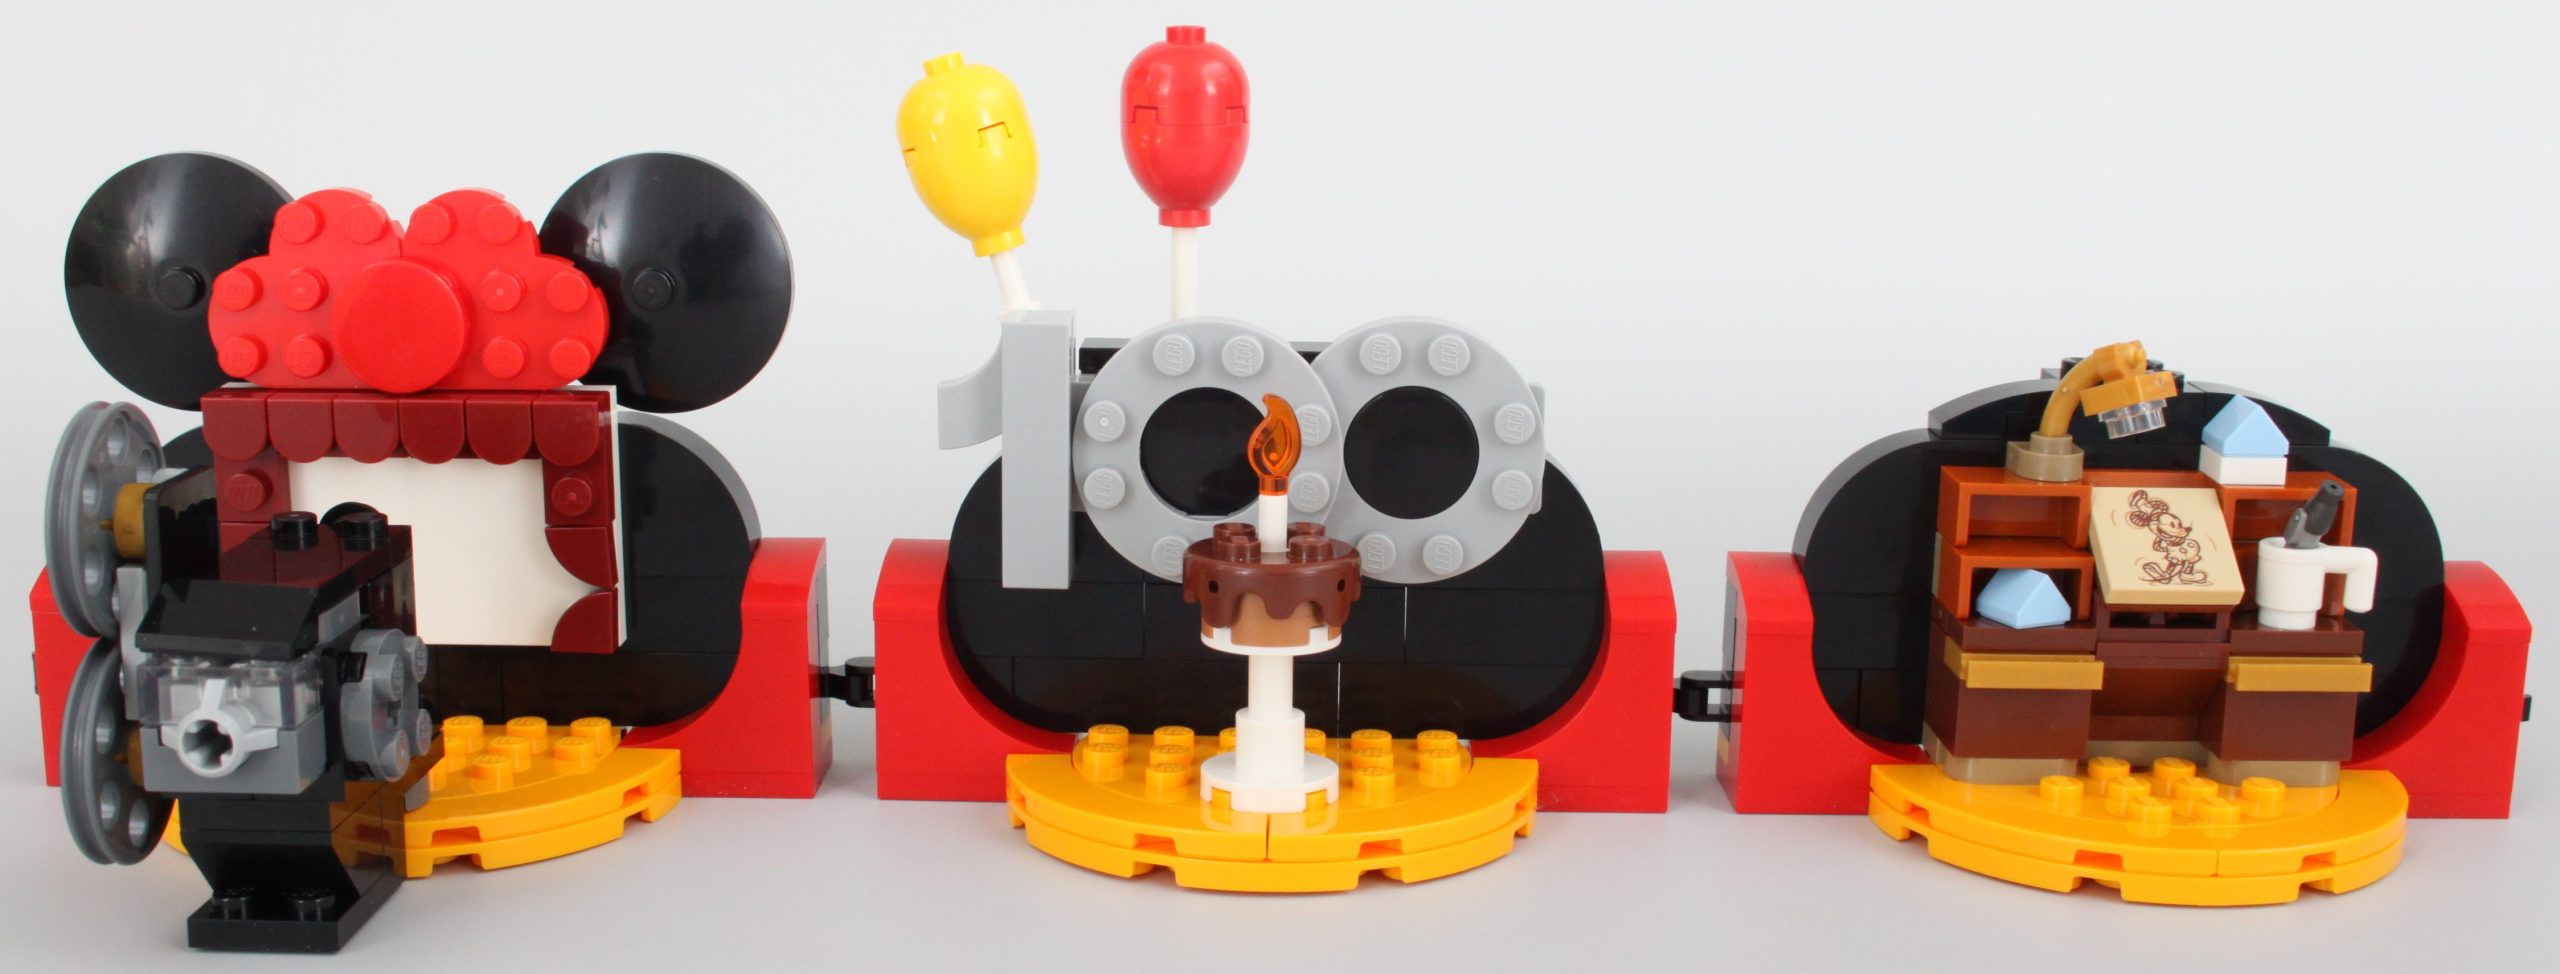 NEW* Lego Disney 100 Years Celebration (40600) Promo with Mickey